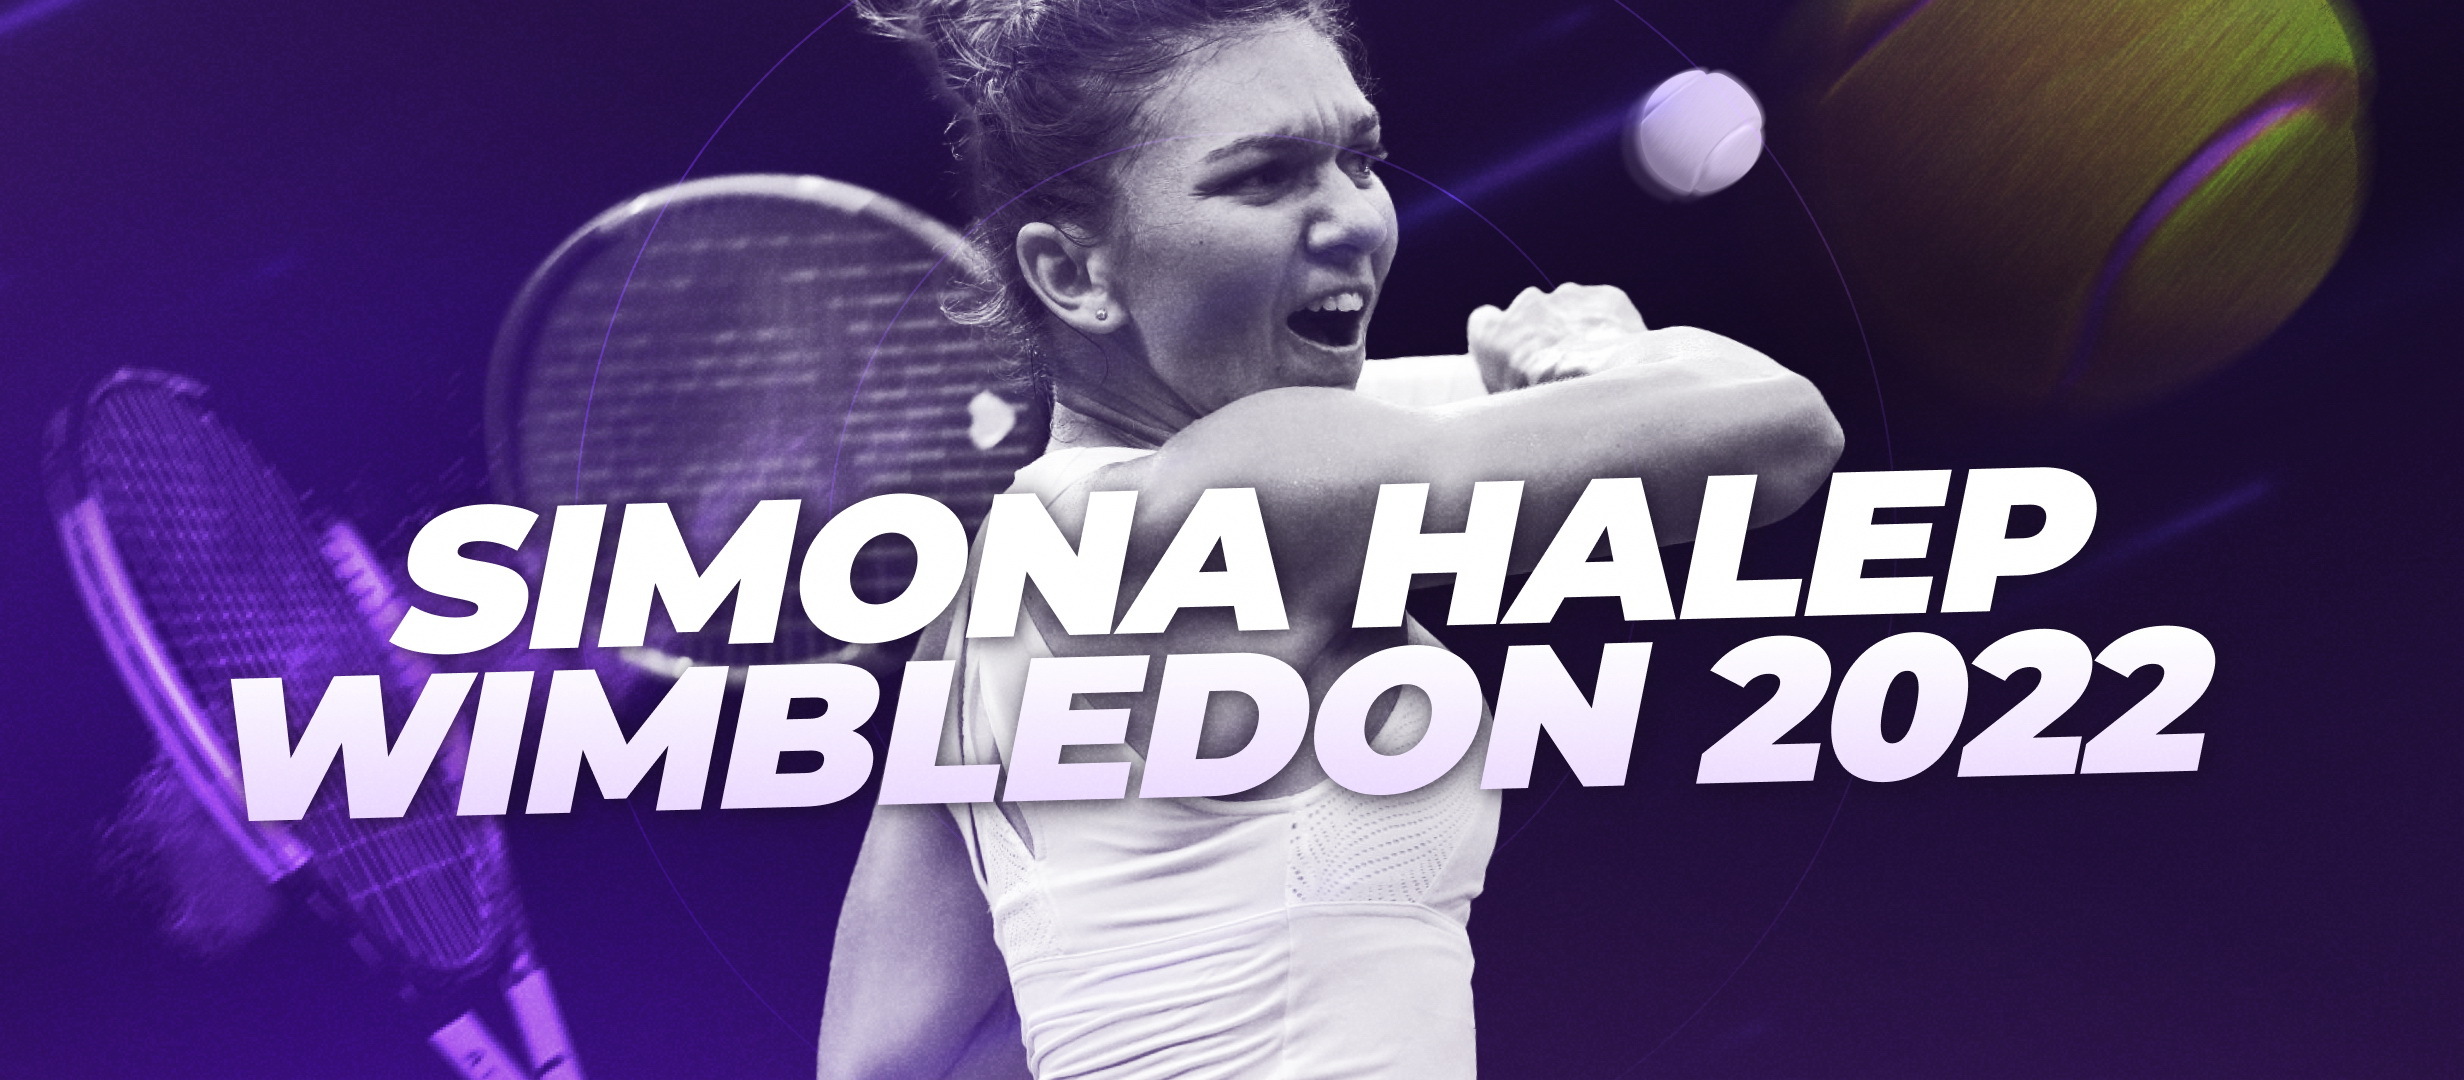 La ce ora se joaca meciul Simona Halep - Paula Badosa la Wimbledon